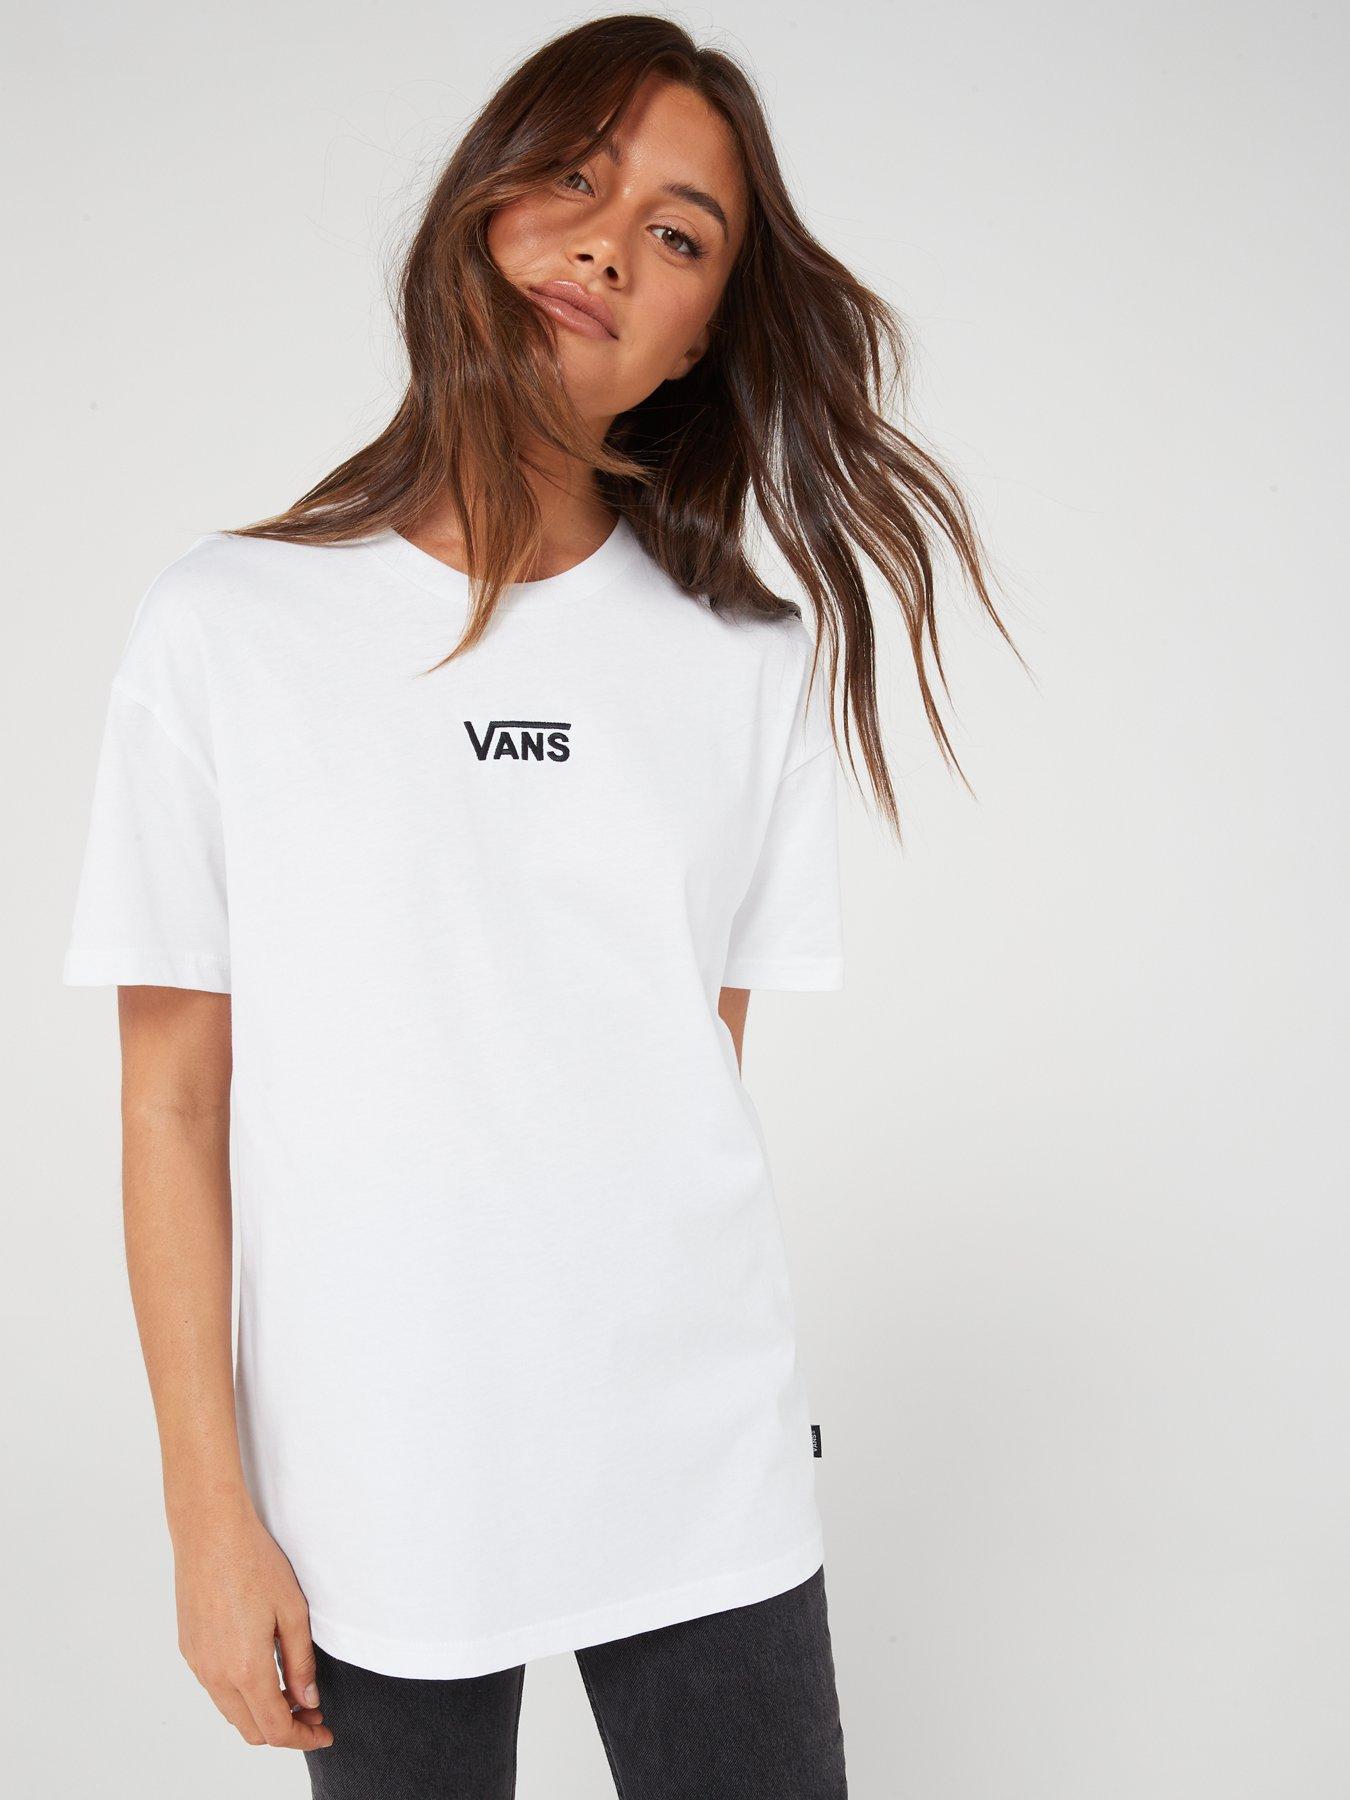 Vans | T-shirts | Very Women | Ireland | Sportswear